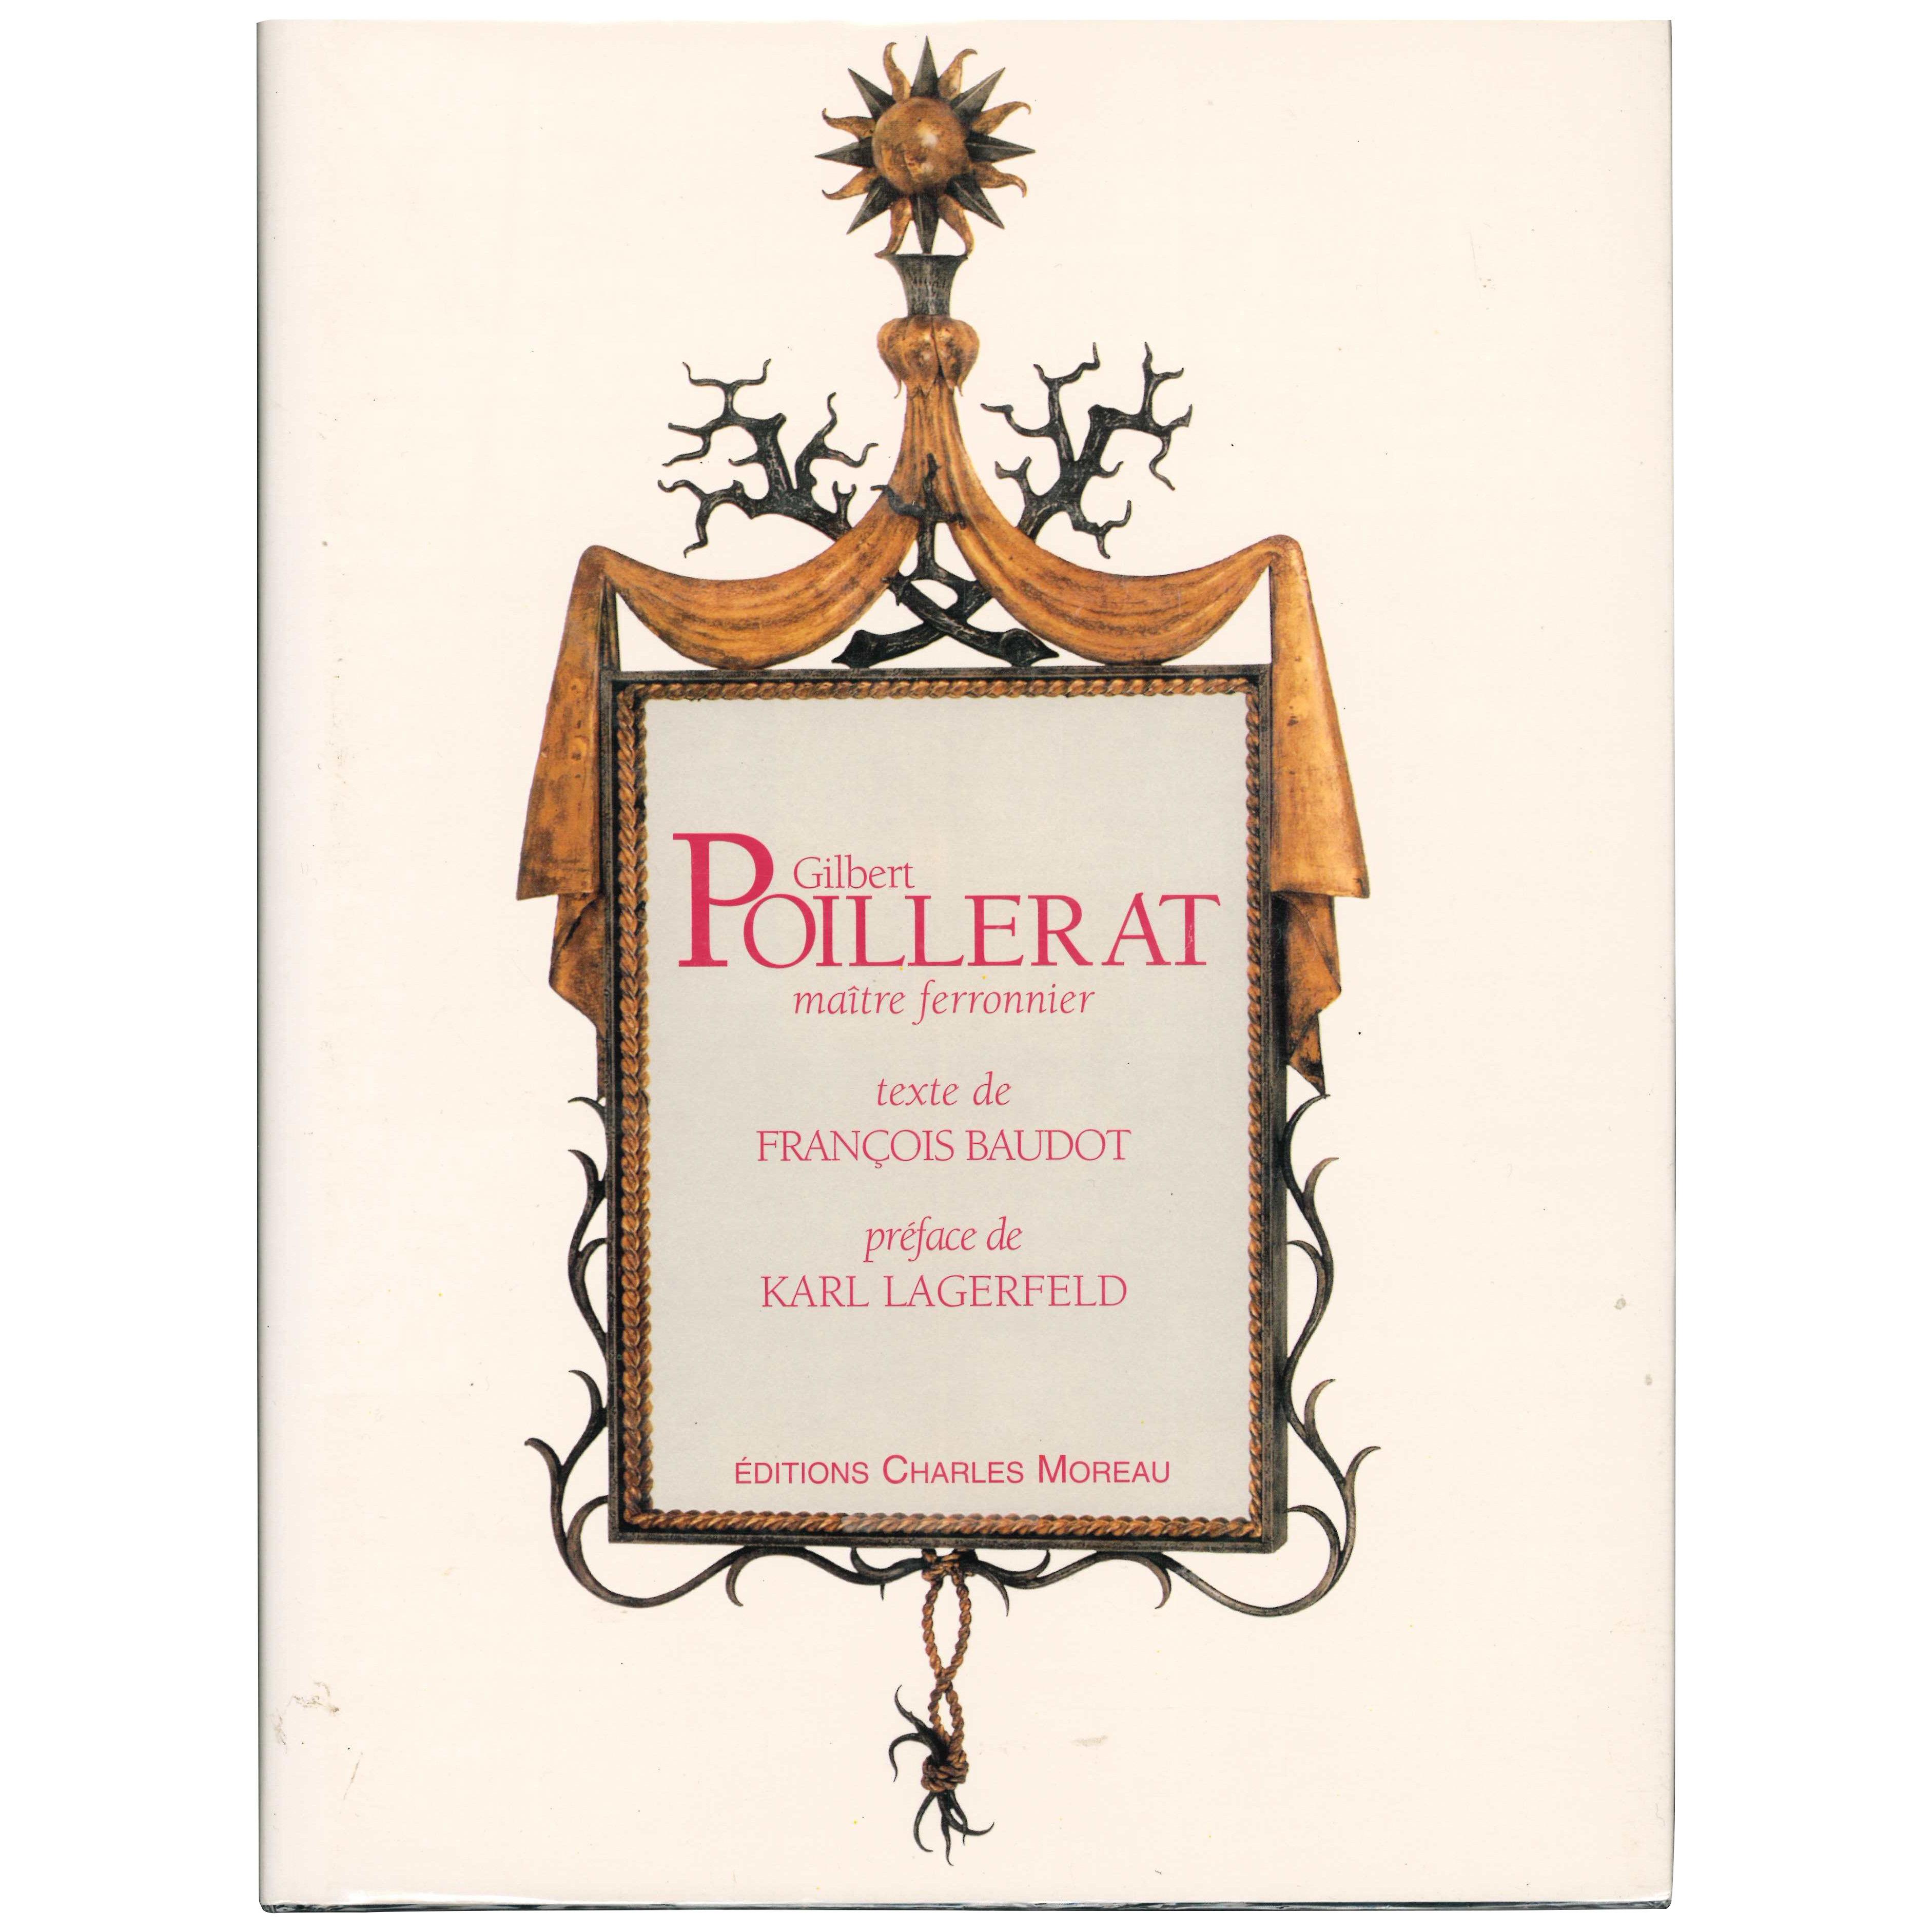 Book on GILBERT POILLERAT - Maitre Ferronnier